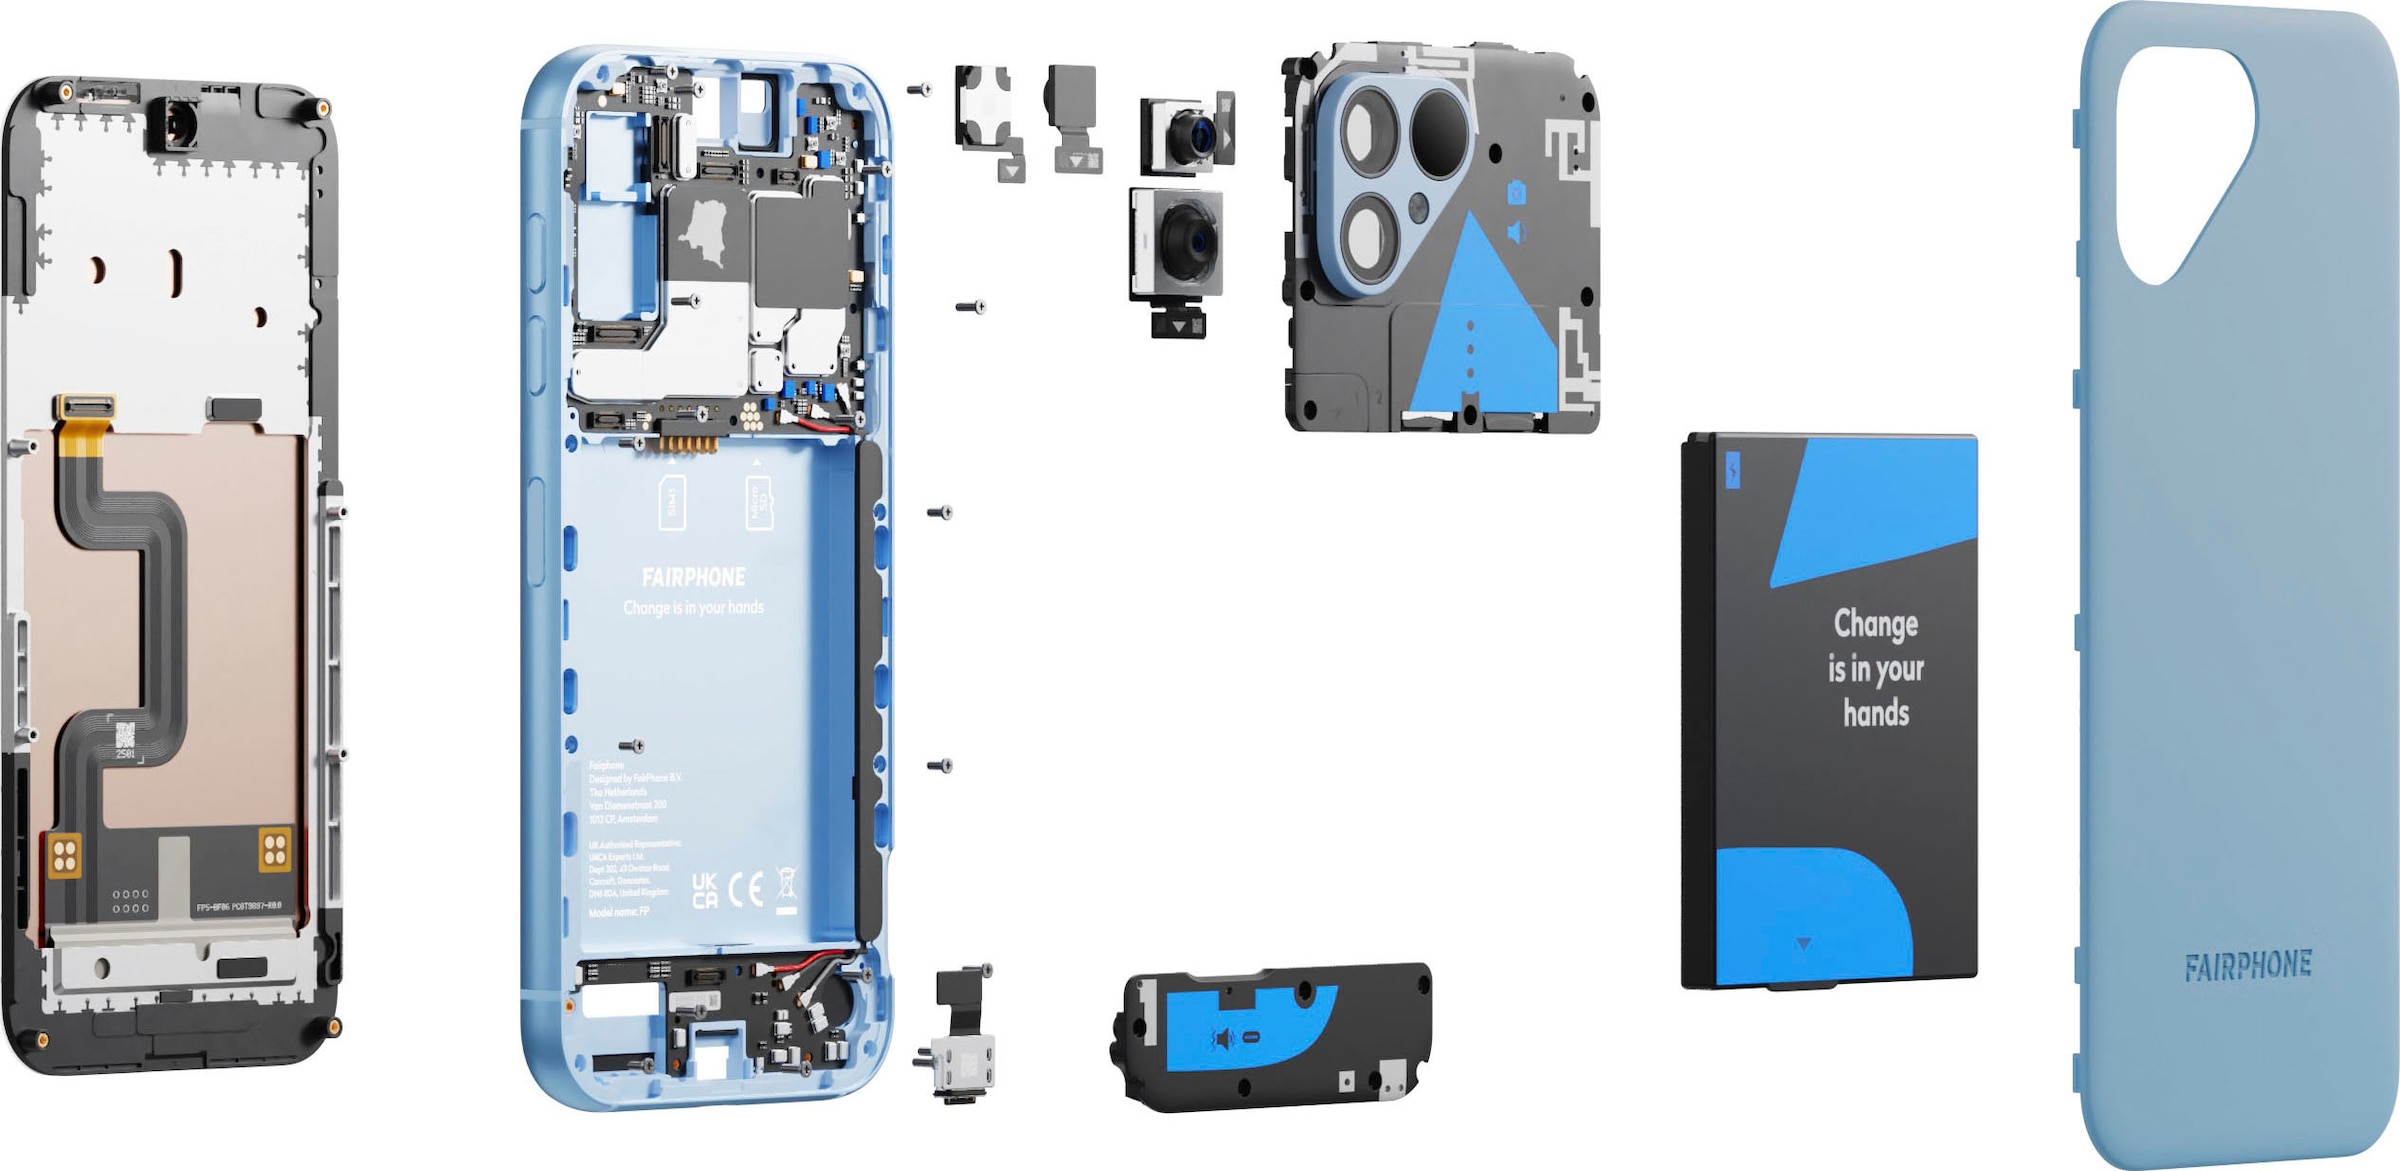 Kamera jetzt »FAIRPHONE Smartphone Fairphone OTTO 256 Zoll, blue, sky cm/6,46 bei MP 50 16,40 Speicherplatz, 5«, GB